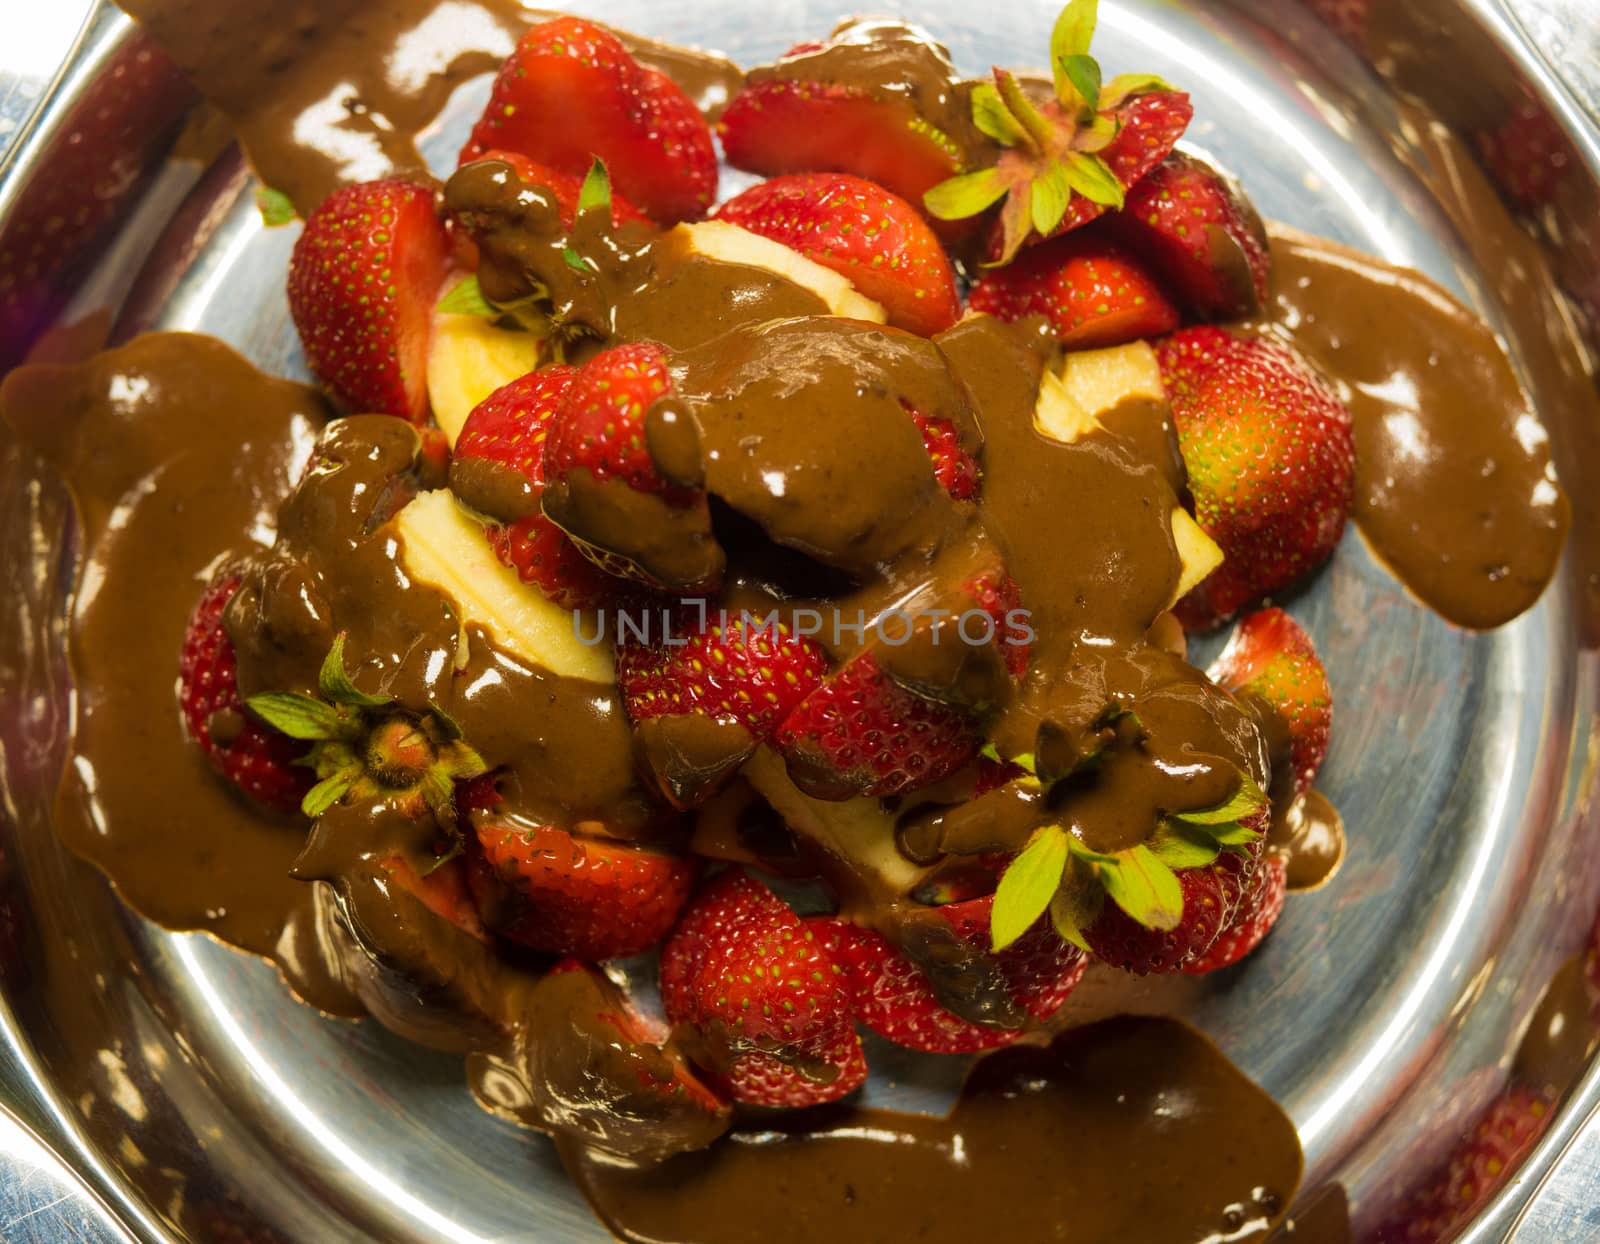 strawberry with hot chocolate by dolfinvik